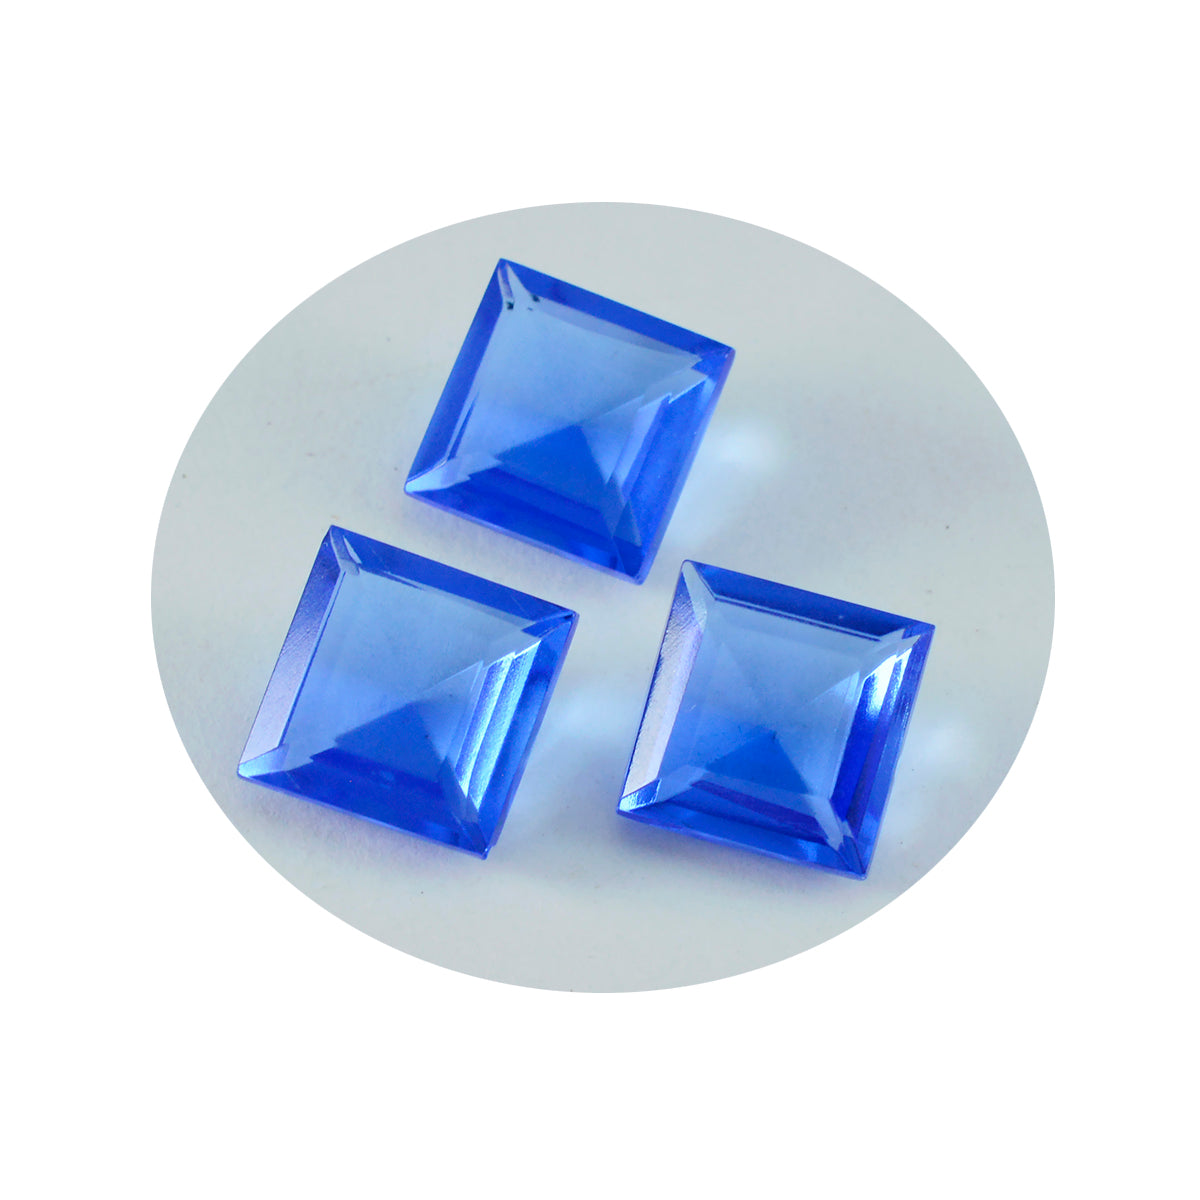 Riyogems 1PC Blue Sapphire CZ Faceted 14x14 mm Square Shape pretty Quality Gem